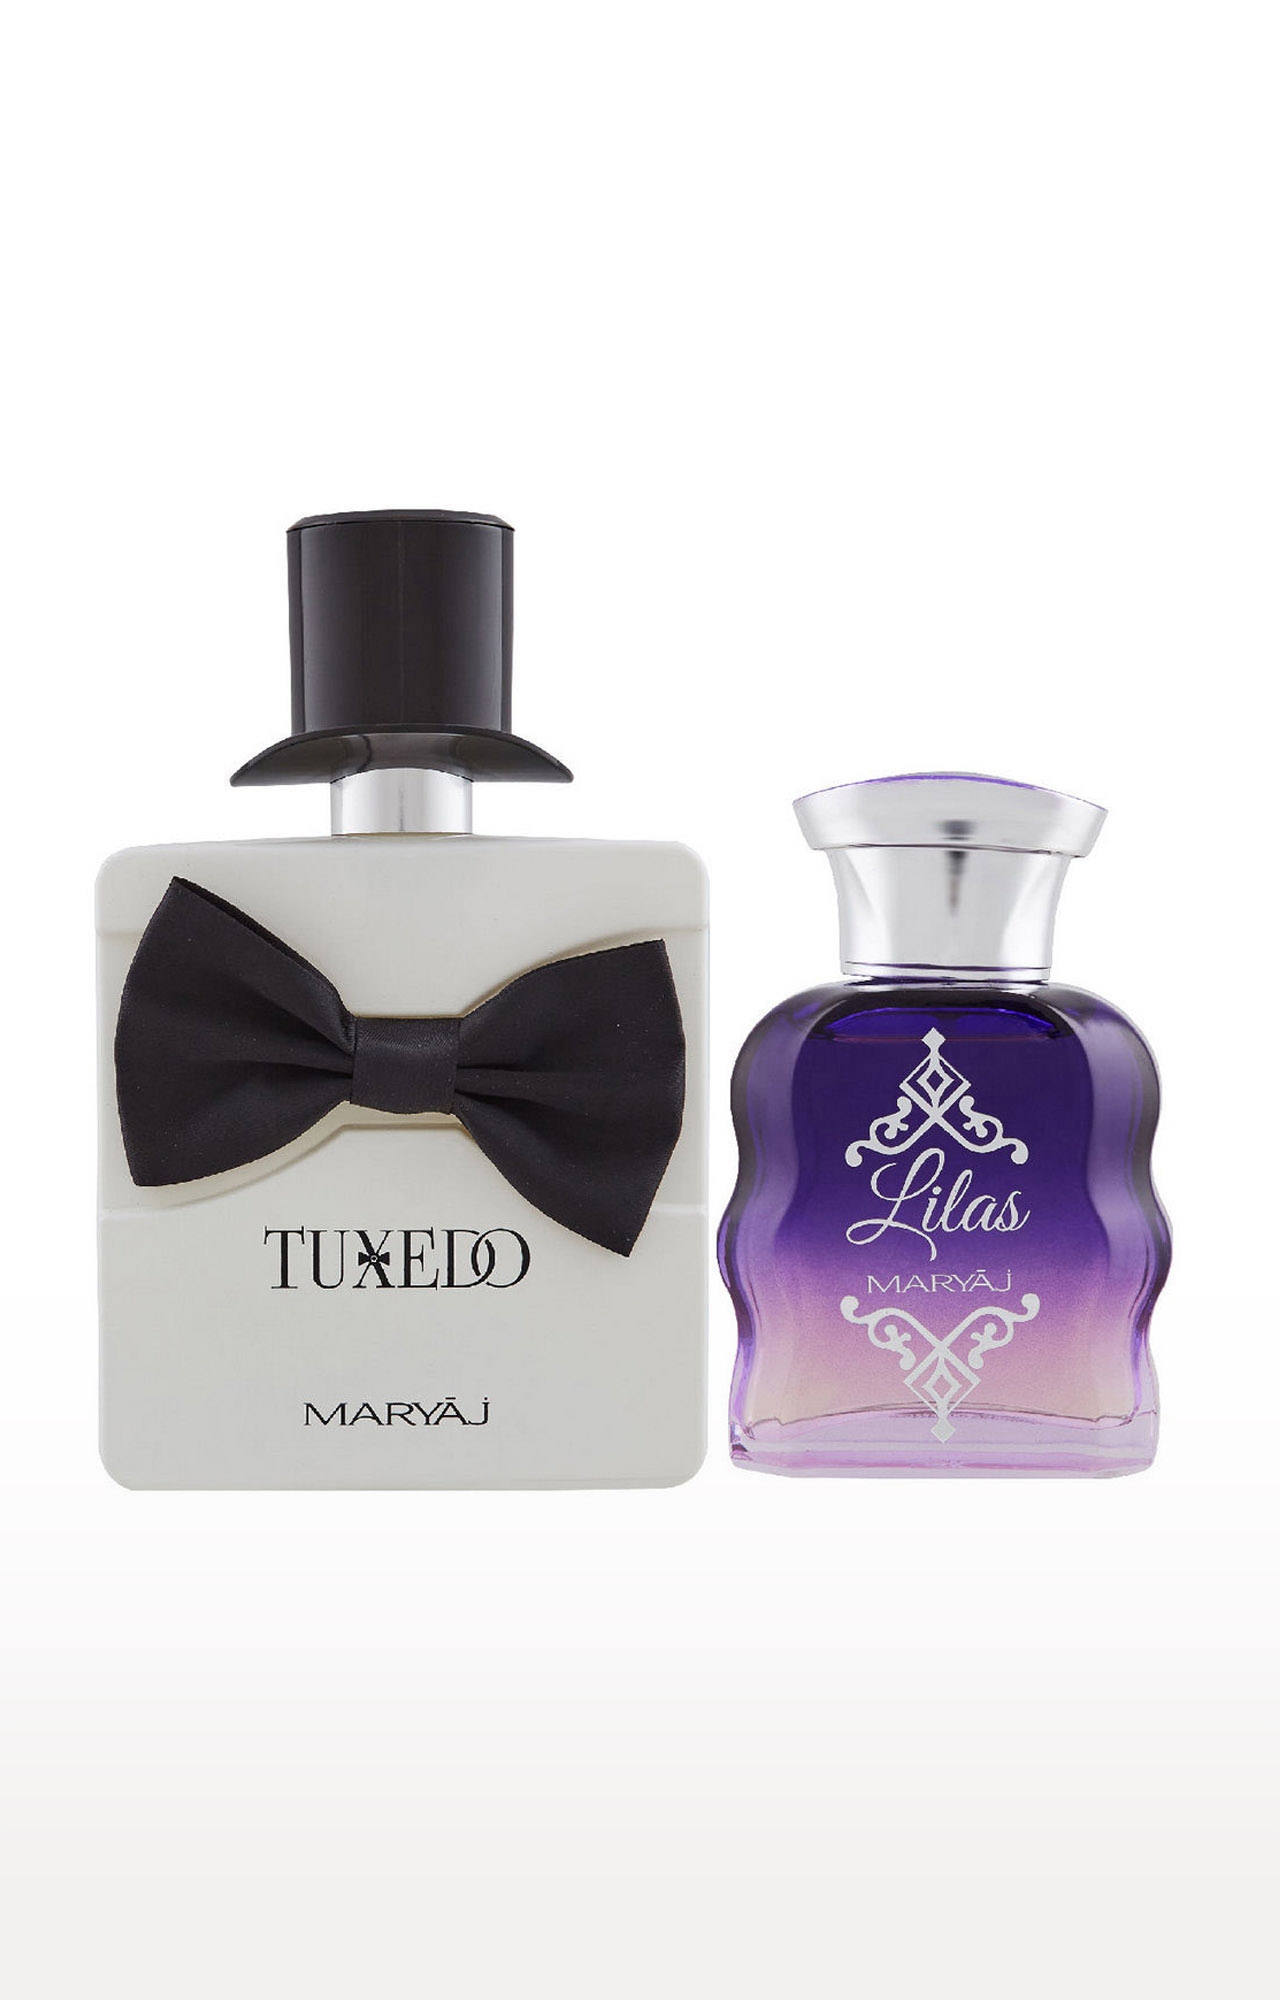 Maryaj Tuxedo Eau De Parfum Perfume 100ml for Men and Maryaj Lilas Eau De Parfum Perfume 100ml for Women